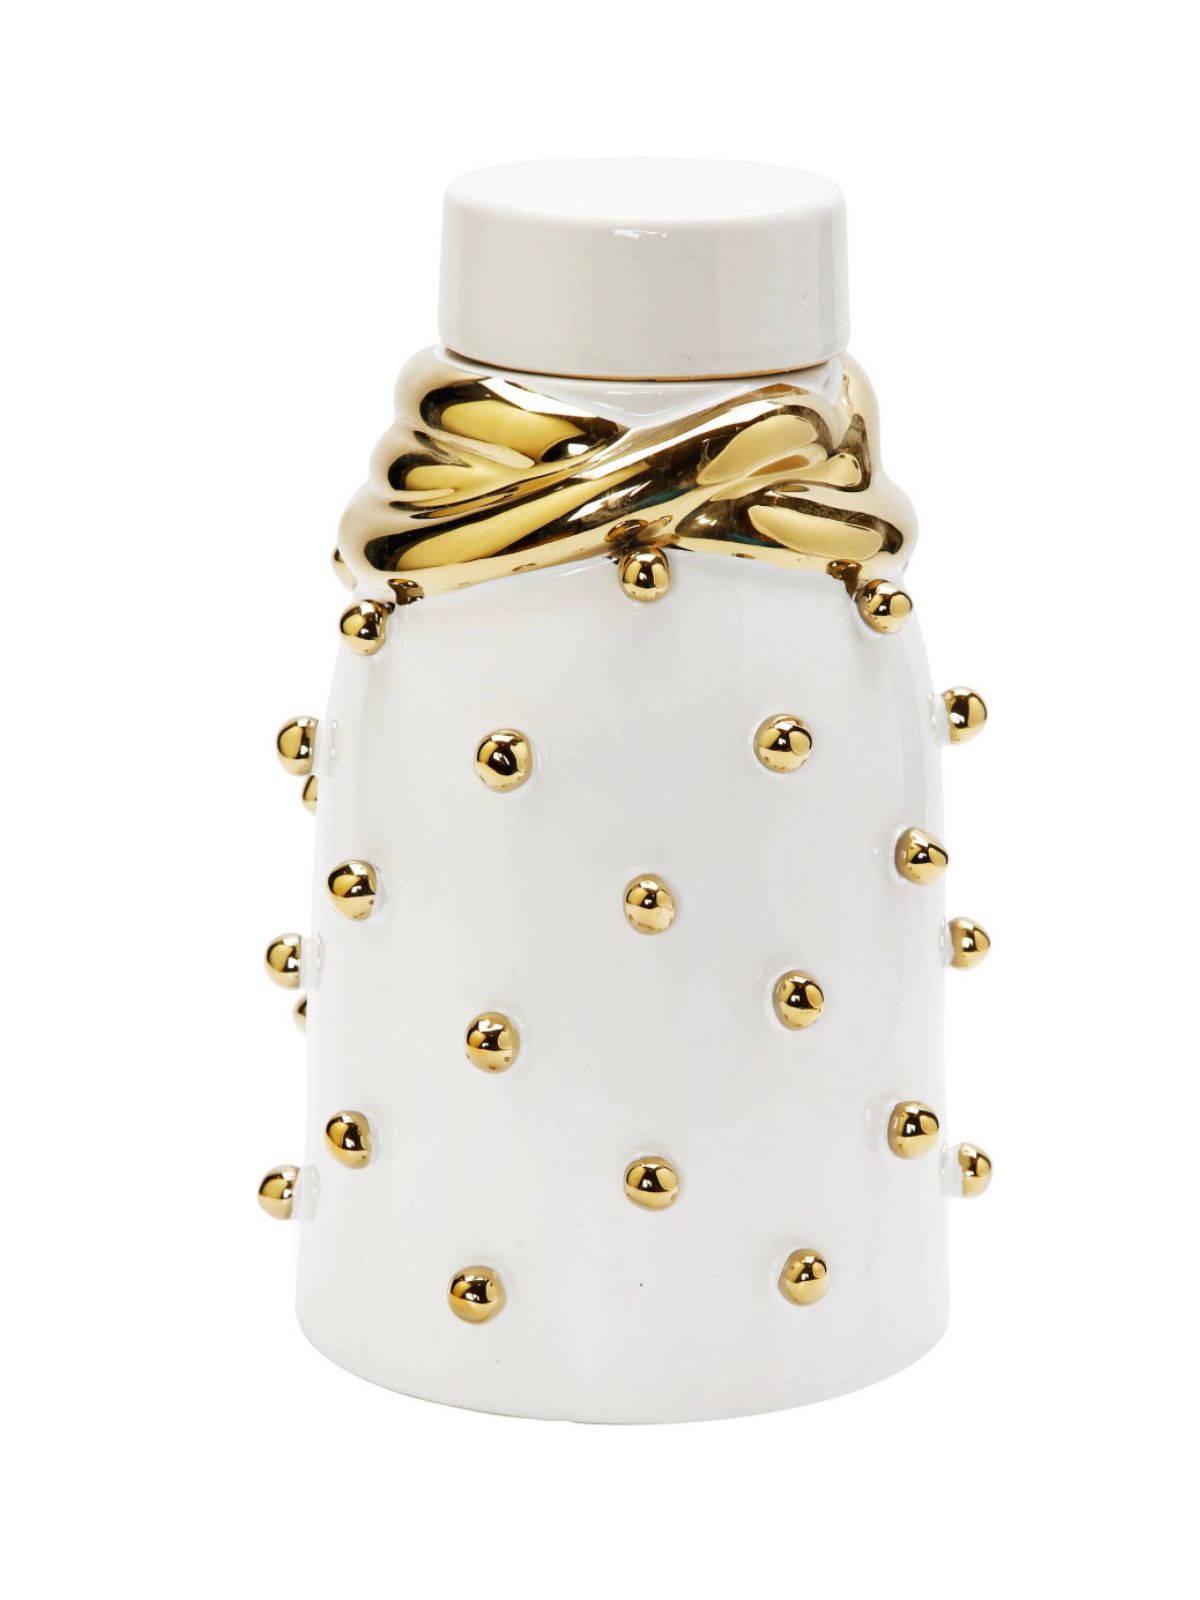 White Ceramic Lidded Jar With Gold Studded Details, Large.